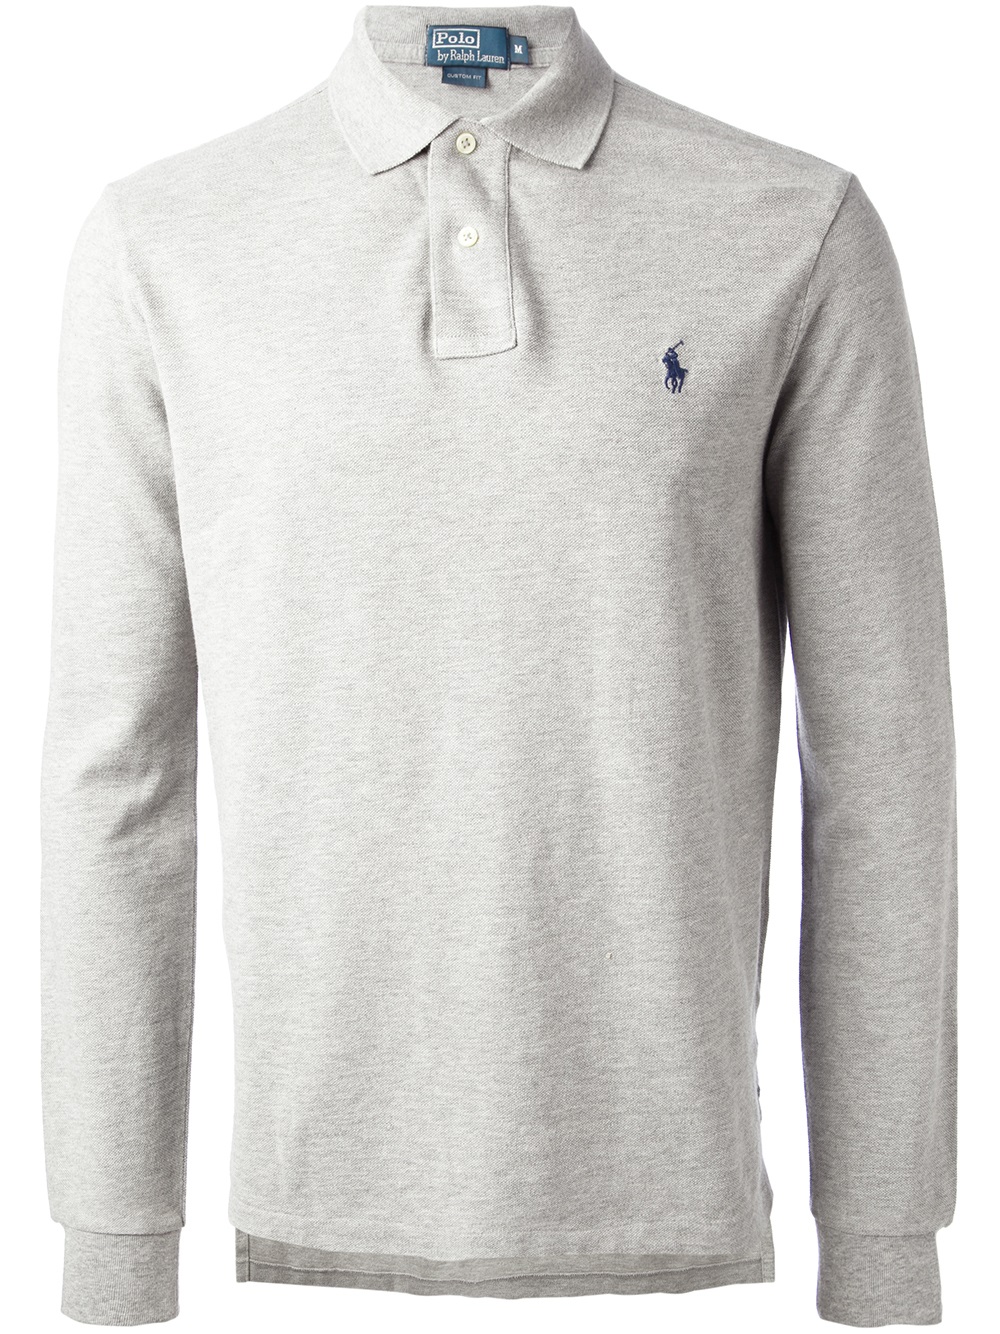 Lyst - Ralph Lauren Blue Label Long Sleeve Polo Shirt in Gray for Men